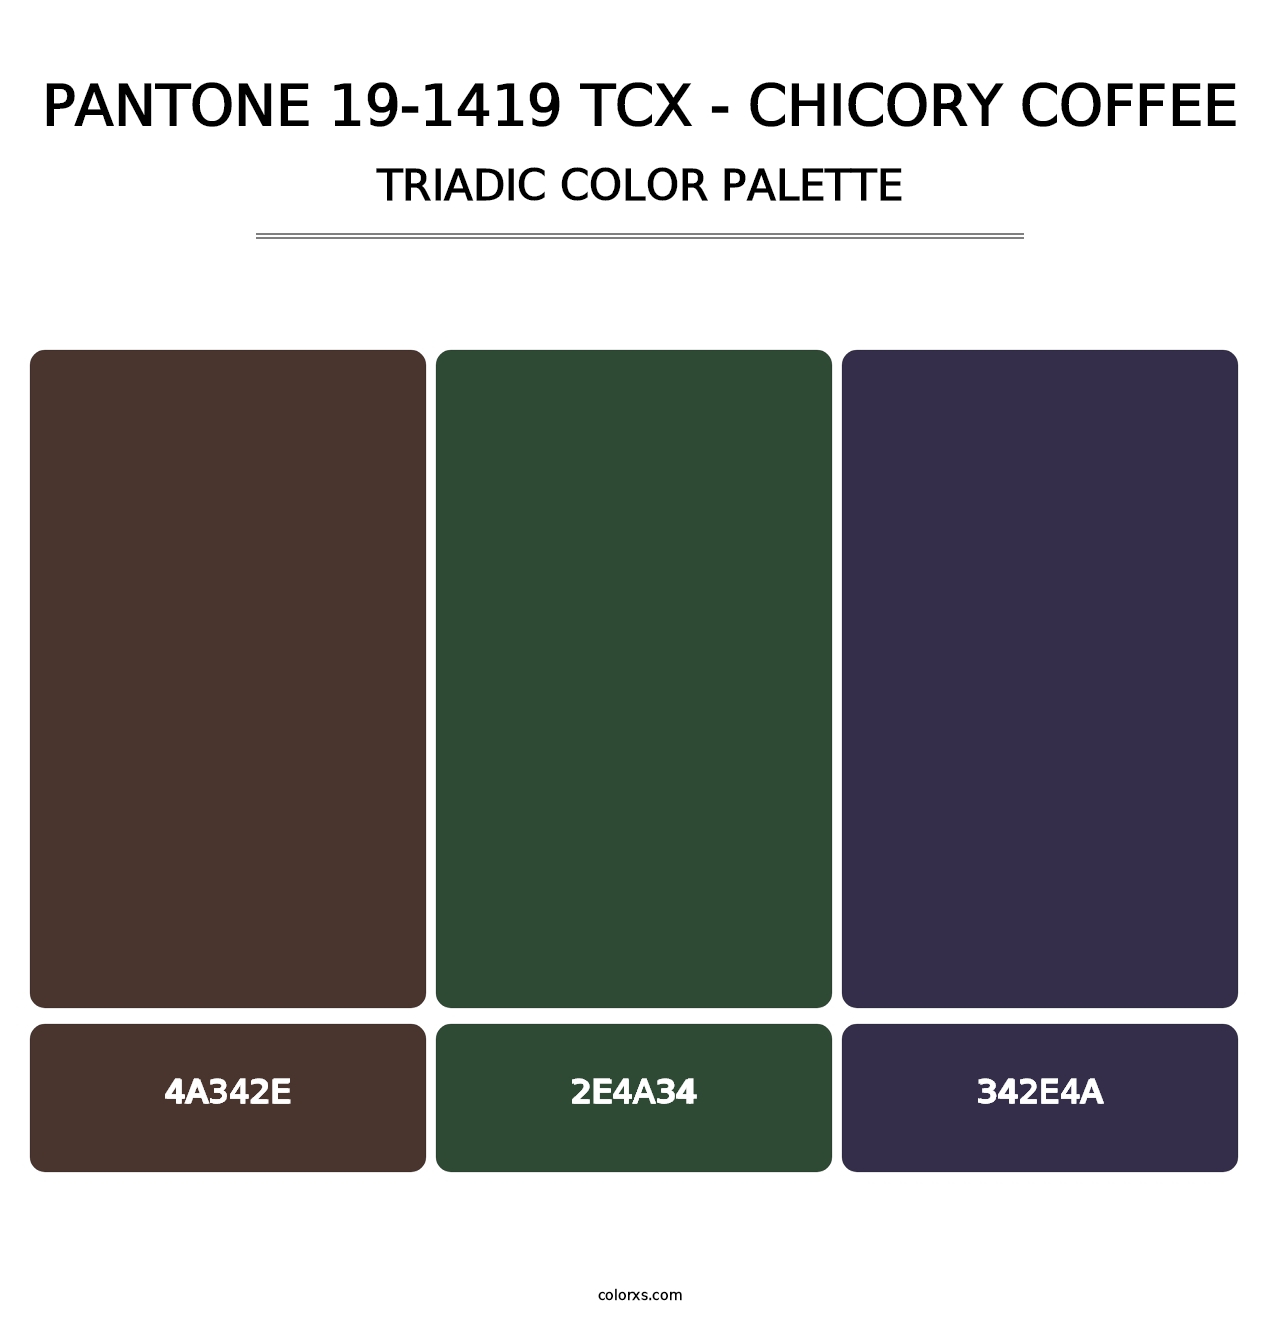 PANTONE 19-1419 TCX - Chicory Coffee - Triadic Color Palette